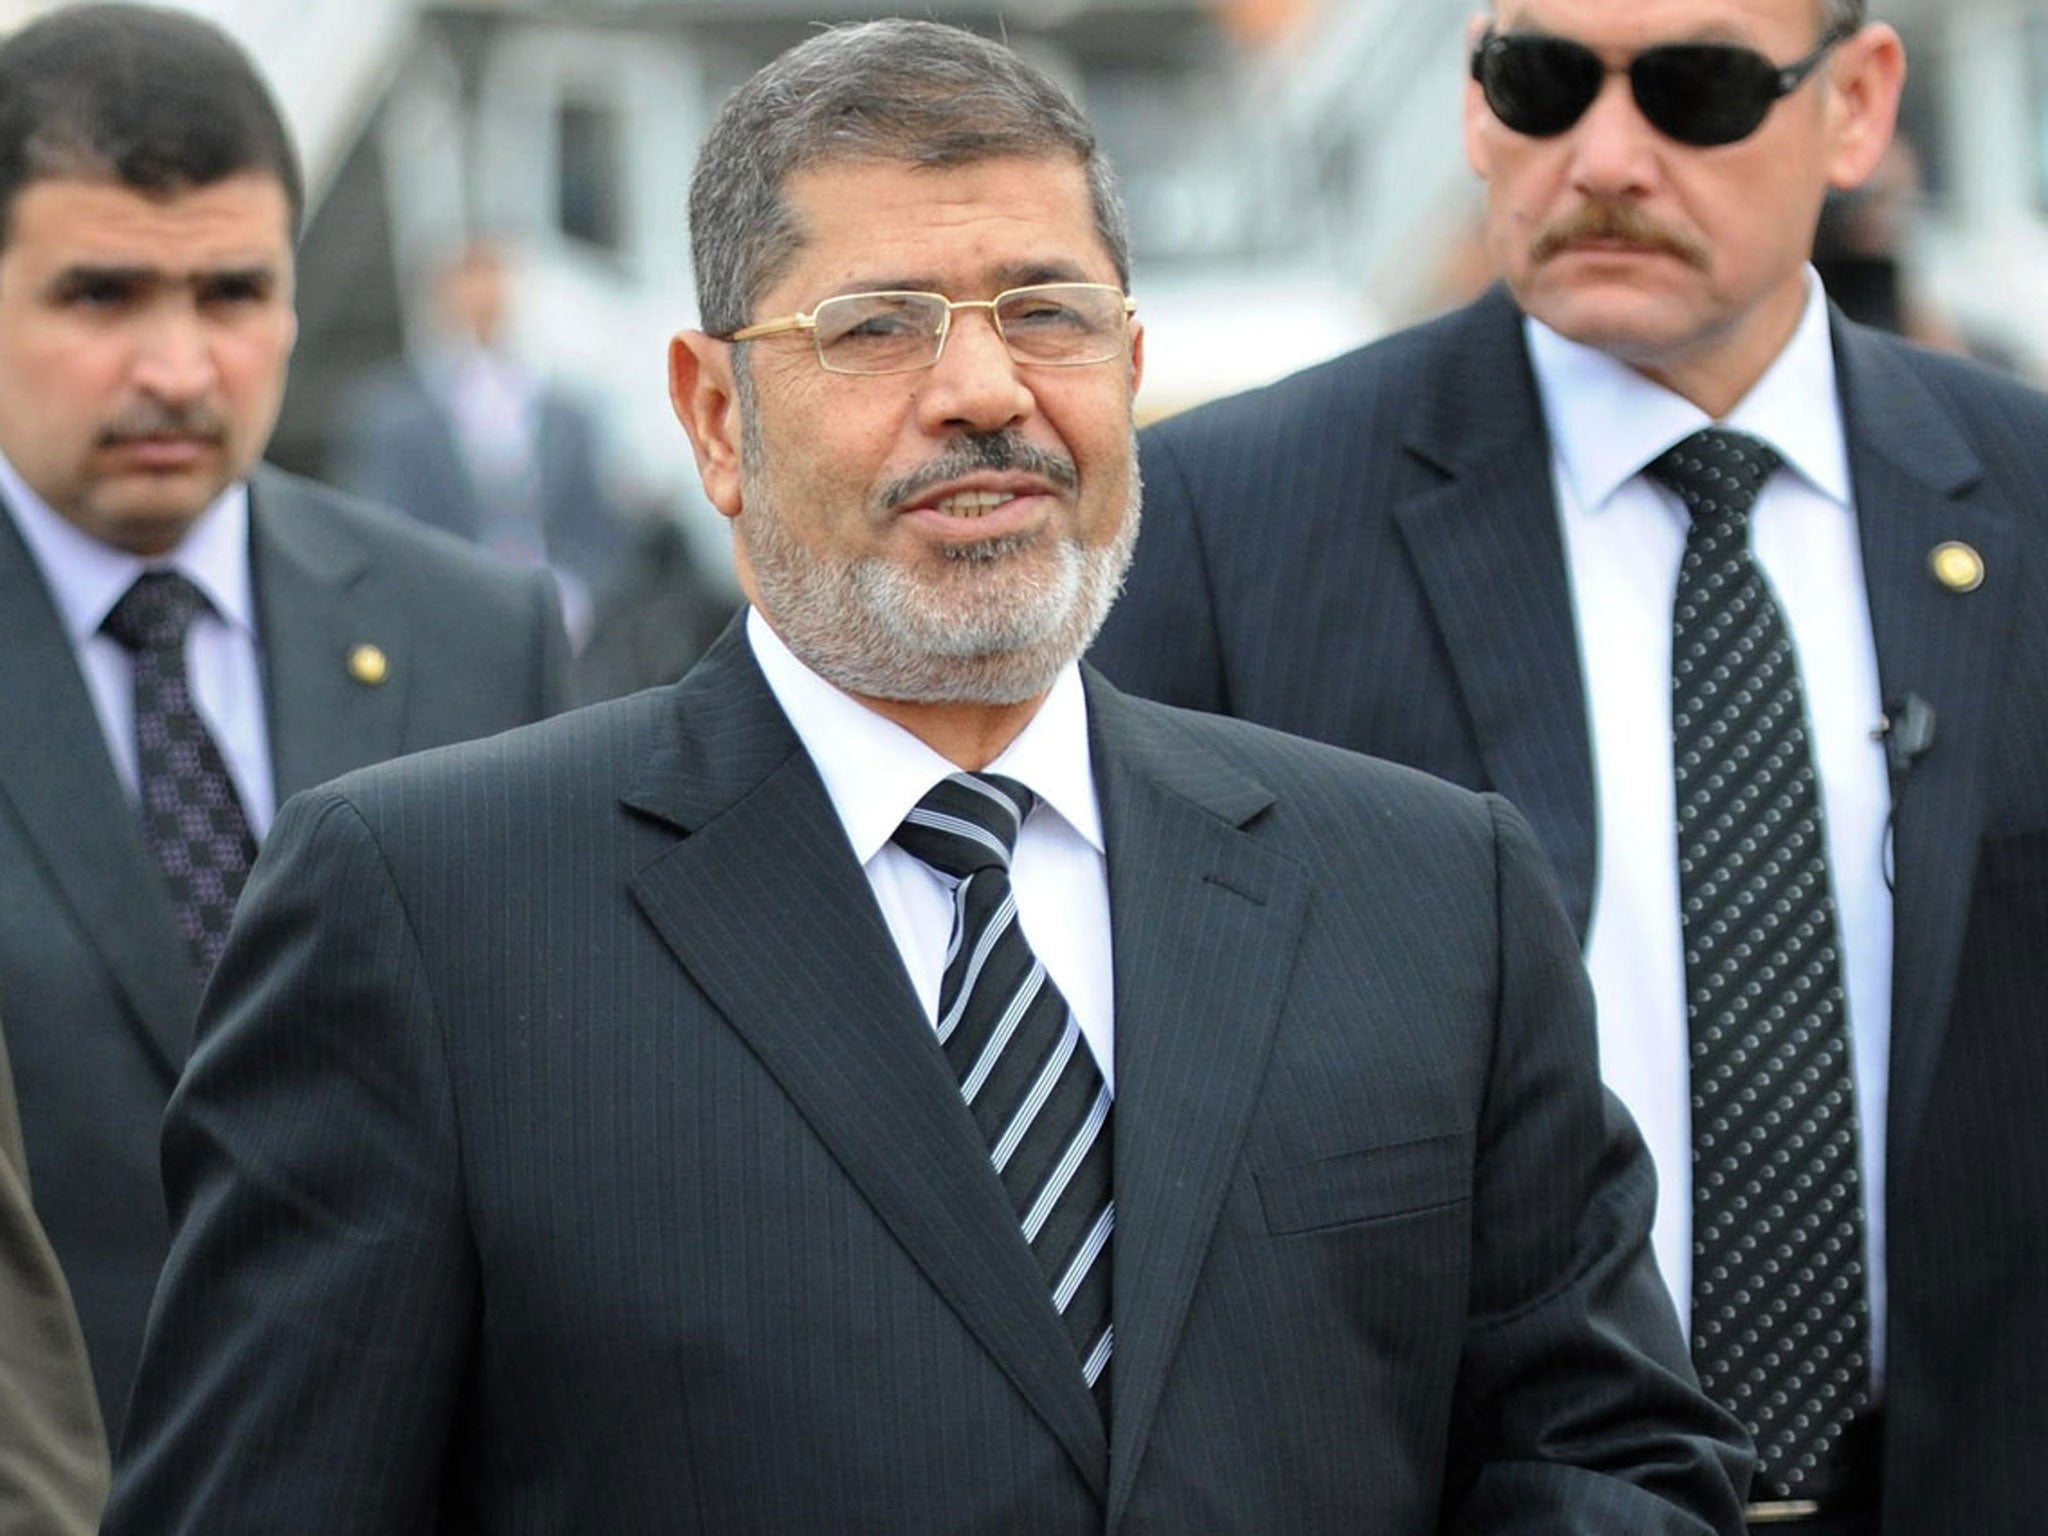 Under pressure: Egypt’s leader Mohammed Morsi is accused of misrule